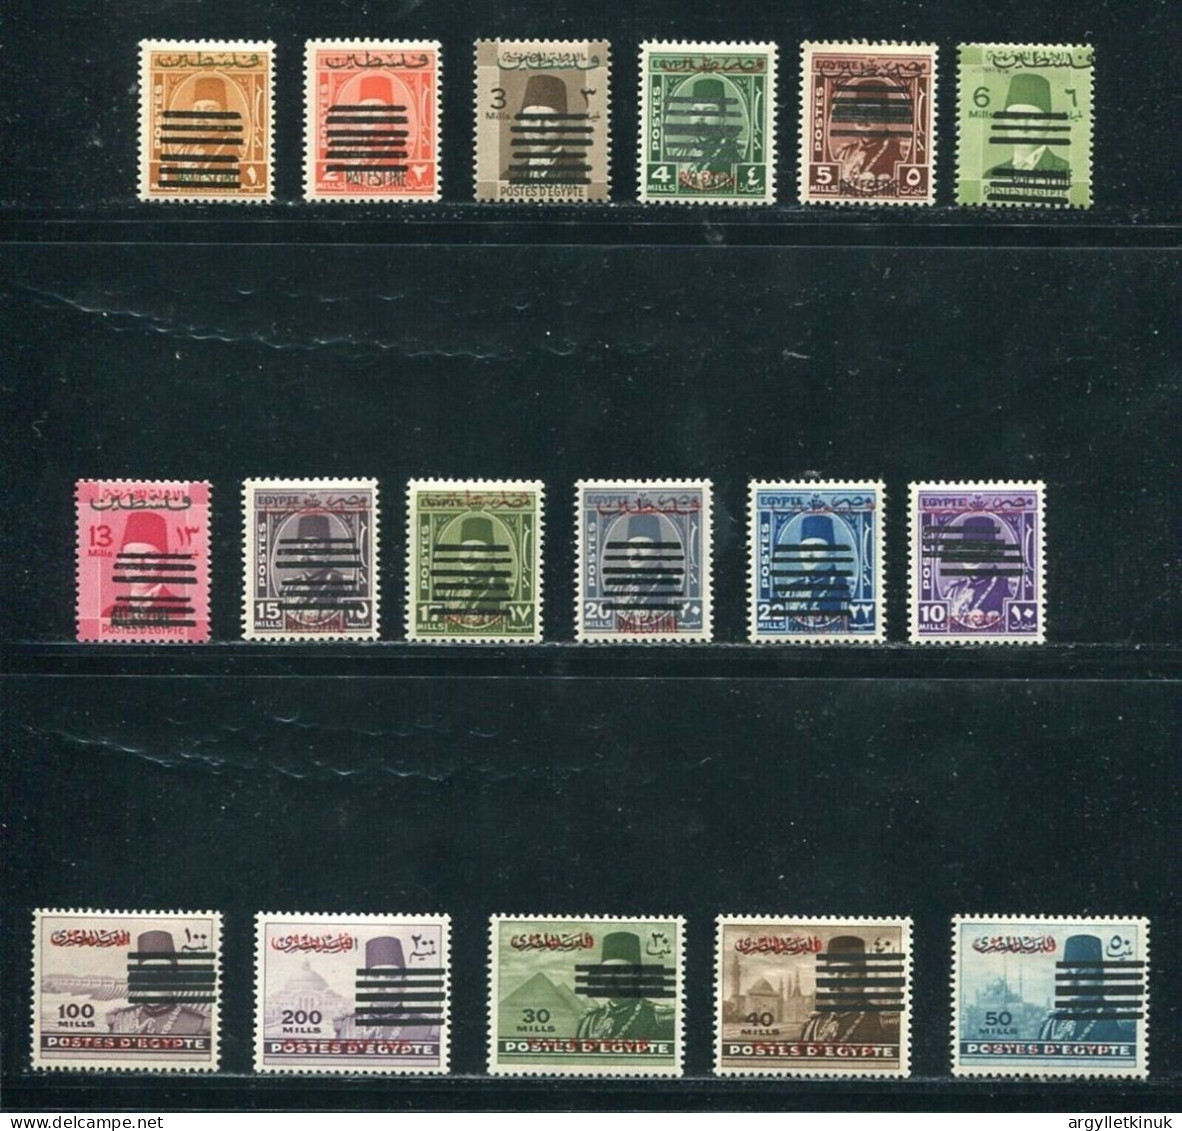 EGYPT GAZA PALESTINE KING FAROUK DOUBLE OVERPRINTS 1953 - Unused Stamps